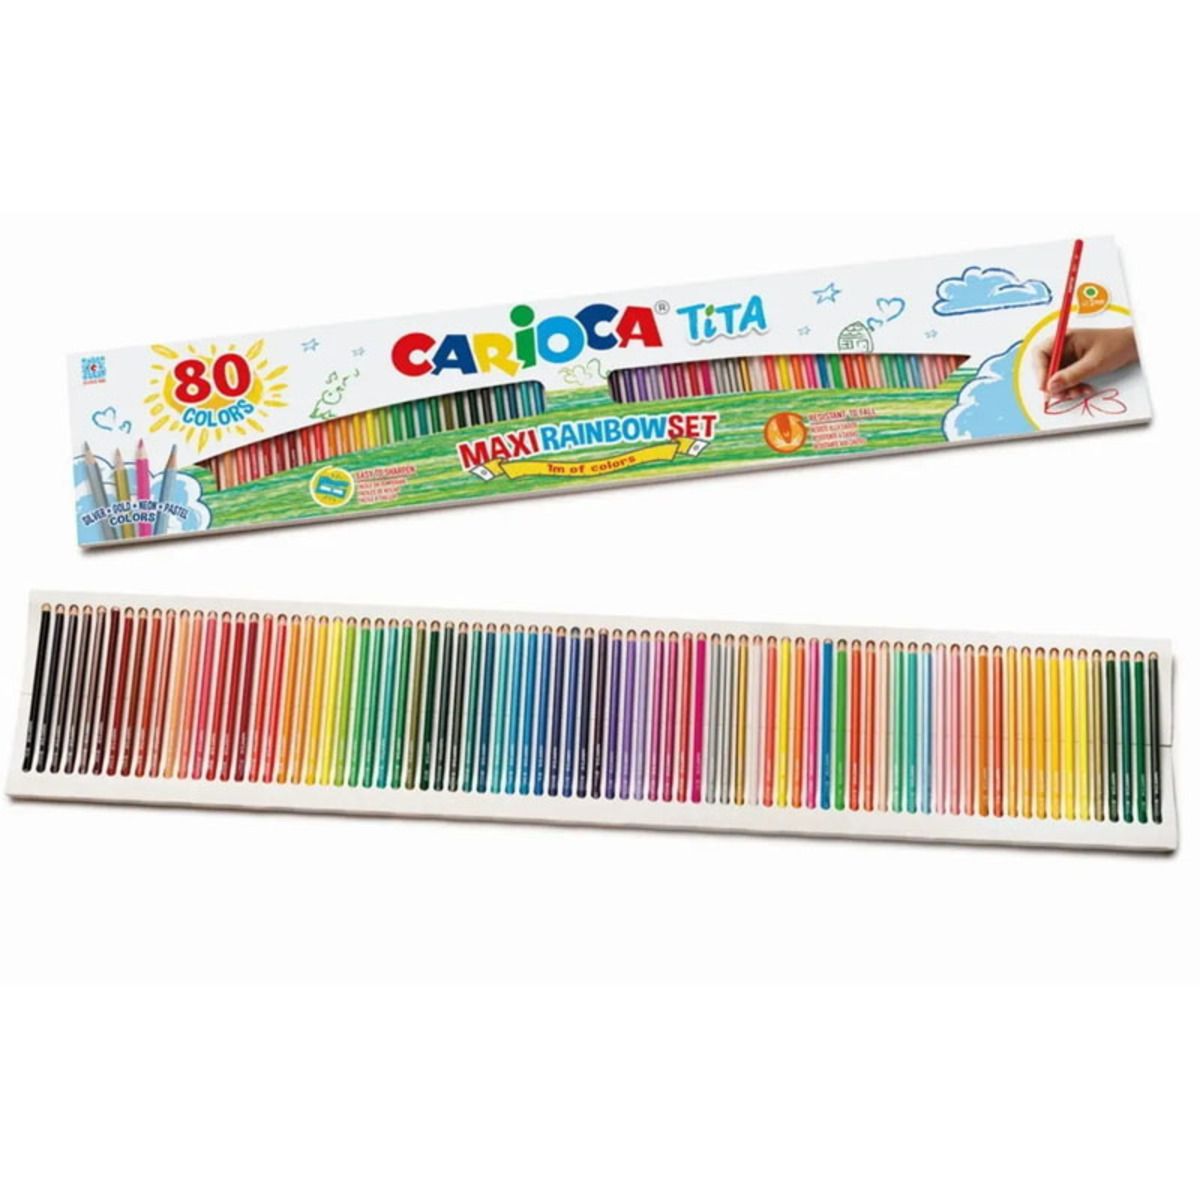 Carioca Tıta 80 Renk Kuru Boya Gökkuşağı Set 42890